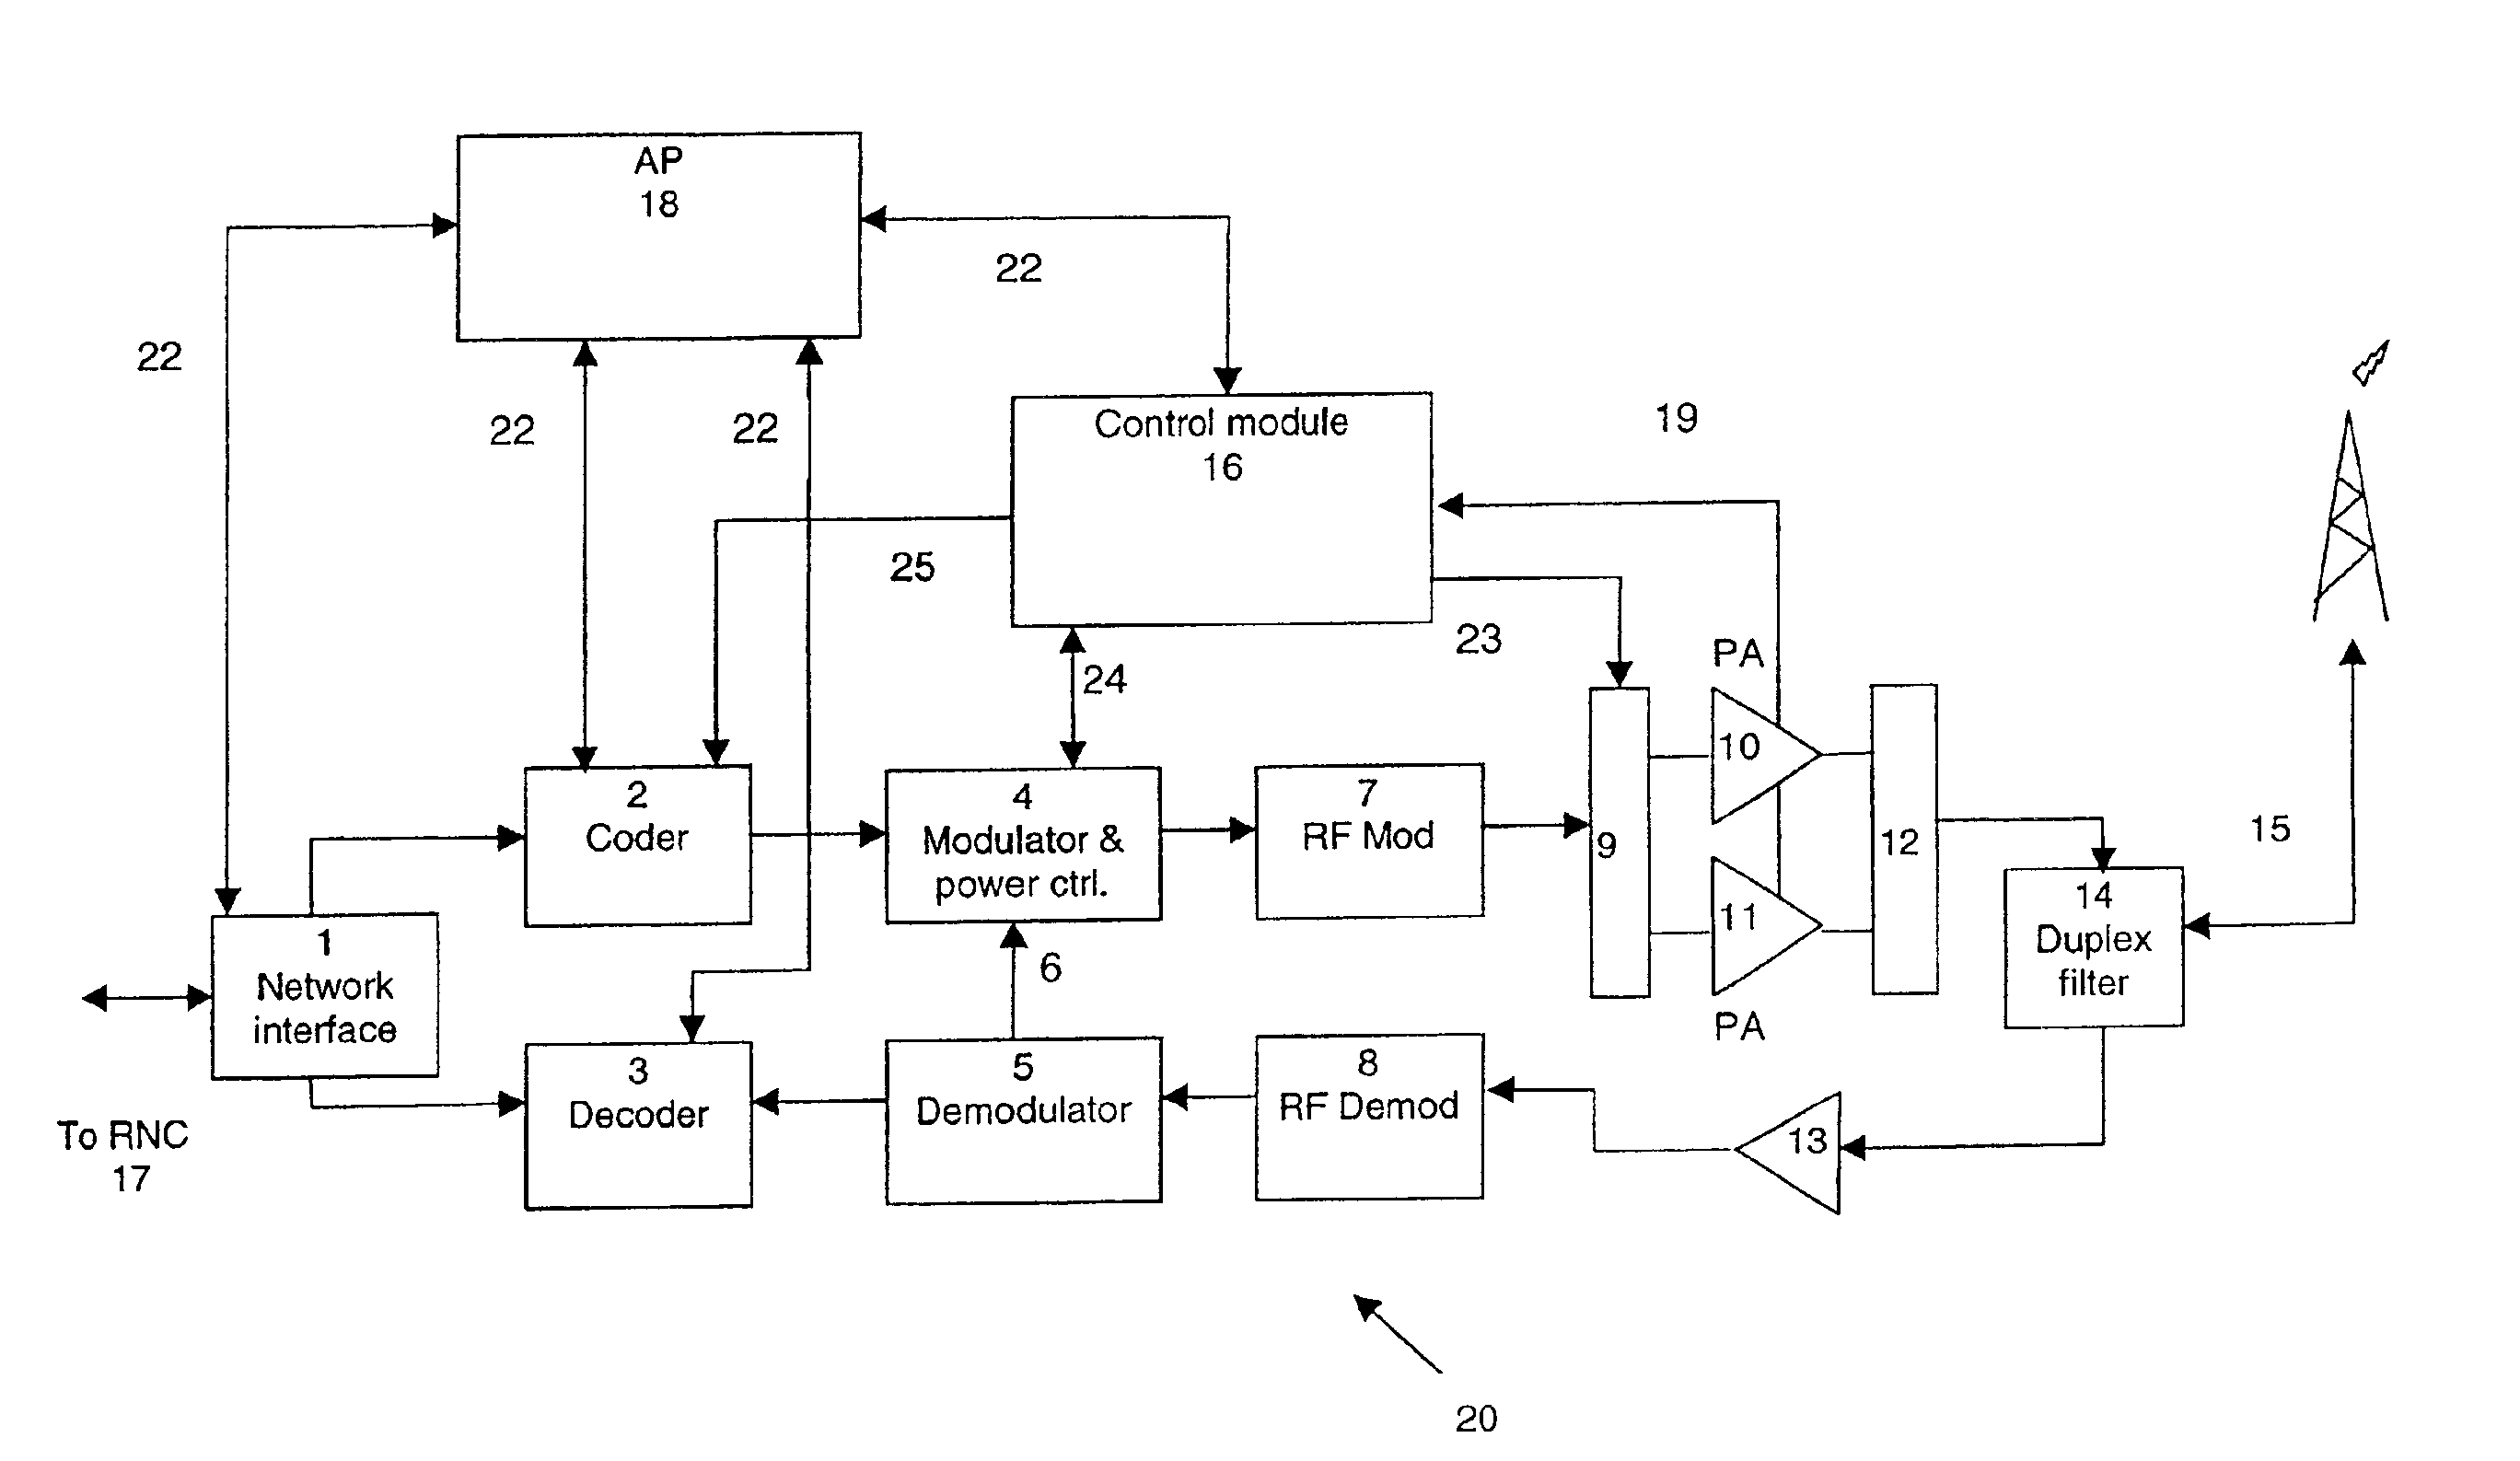 Error handling within power amplifier modules in wireless base-station